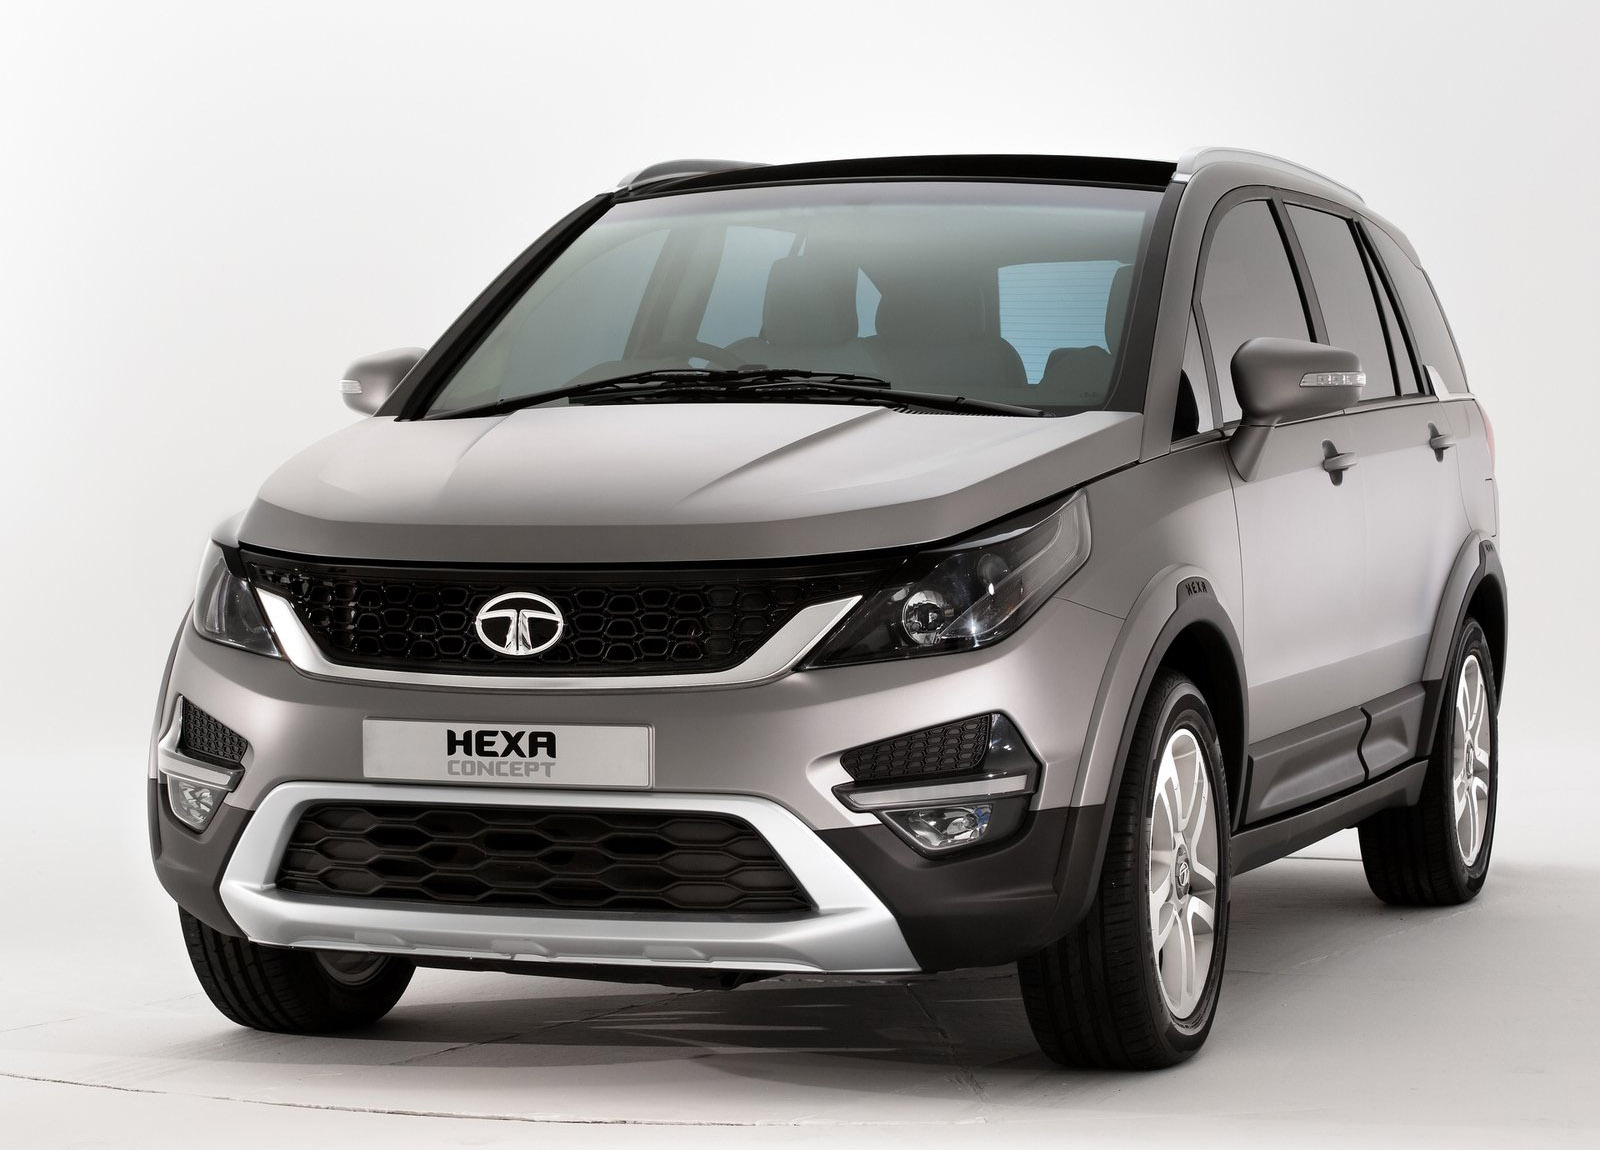 2015 Tata Hexa Concept - HD Pictures @ 